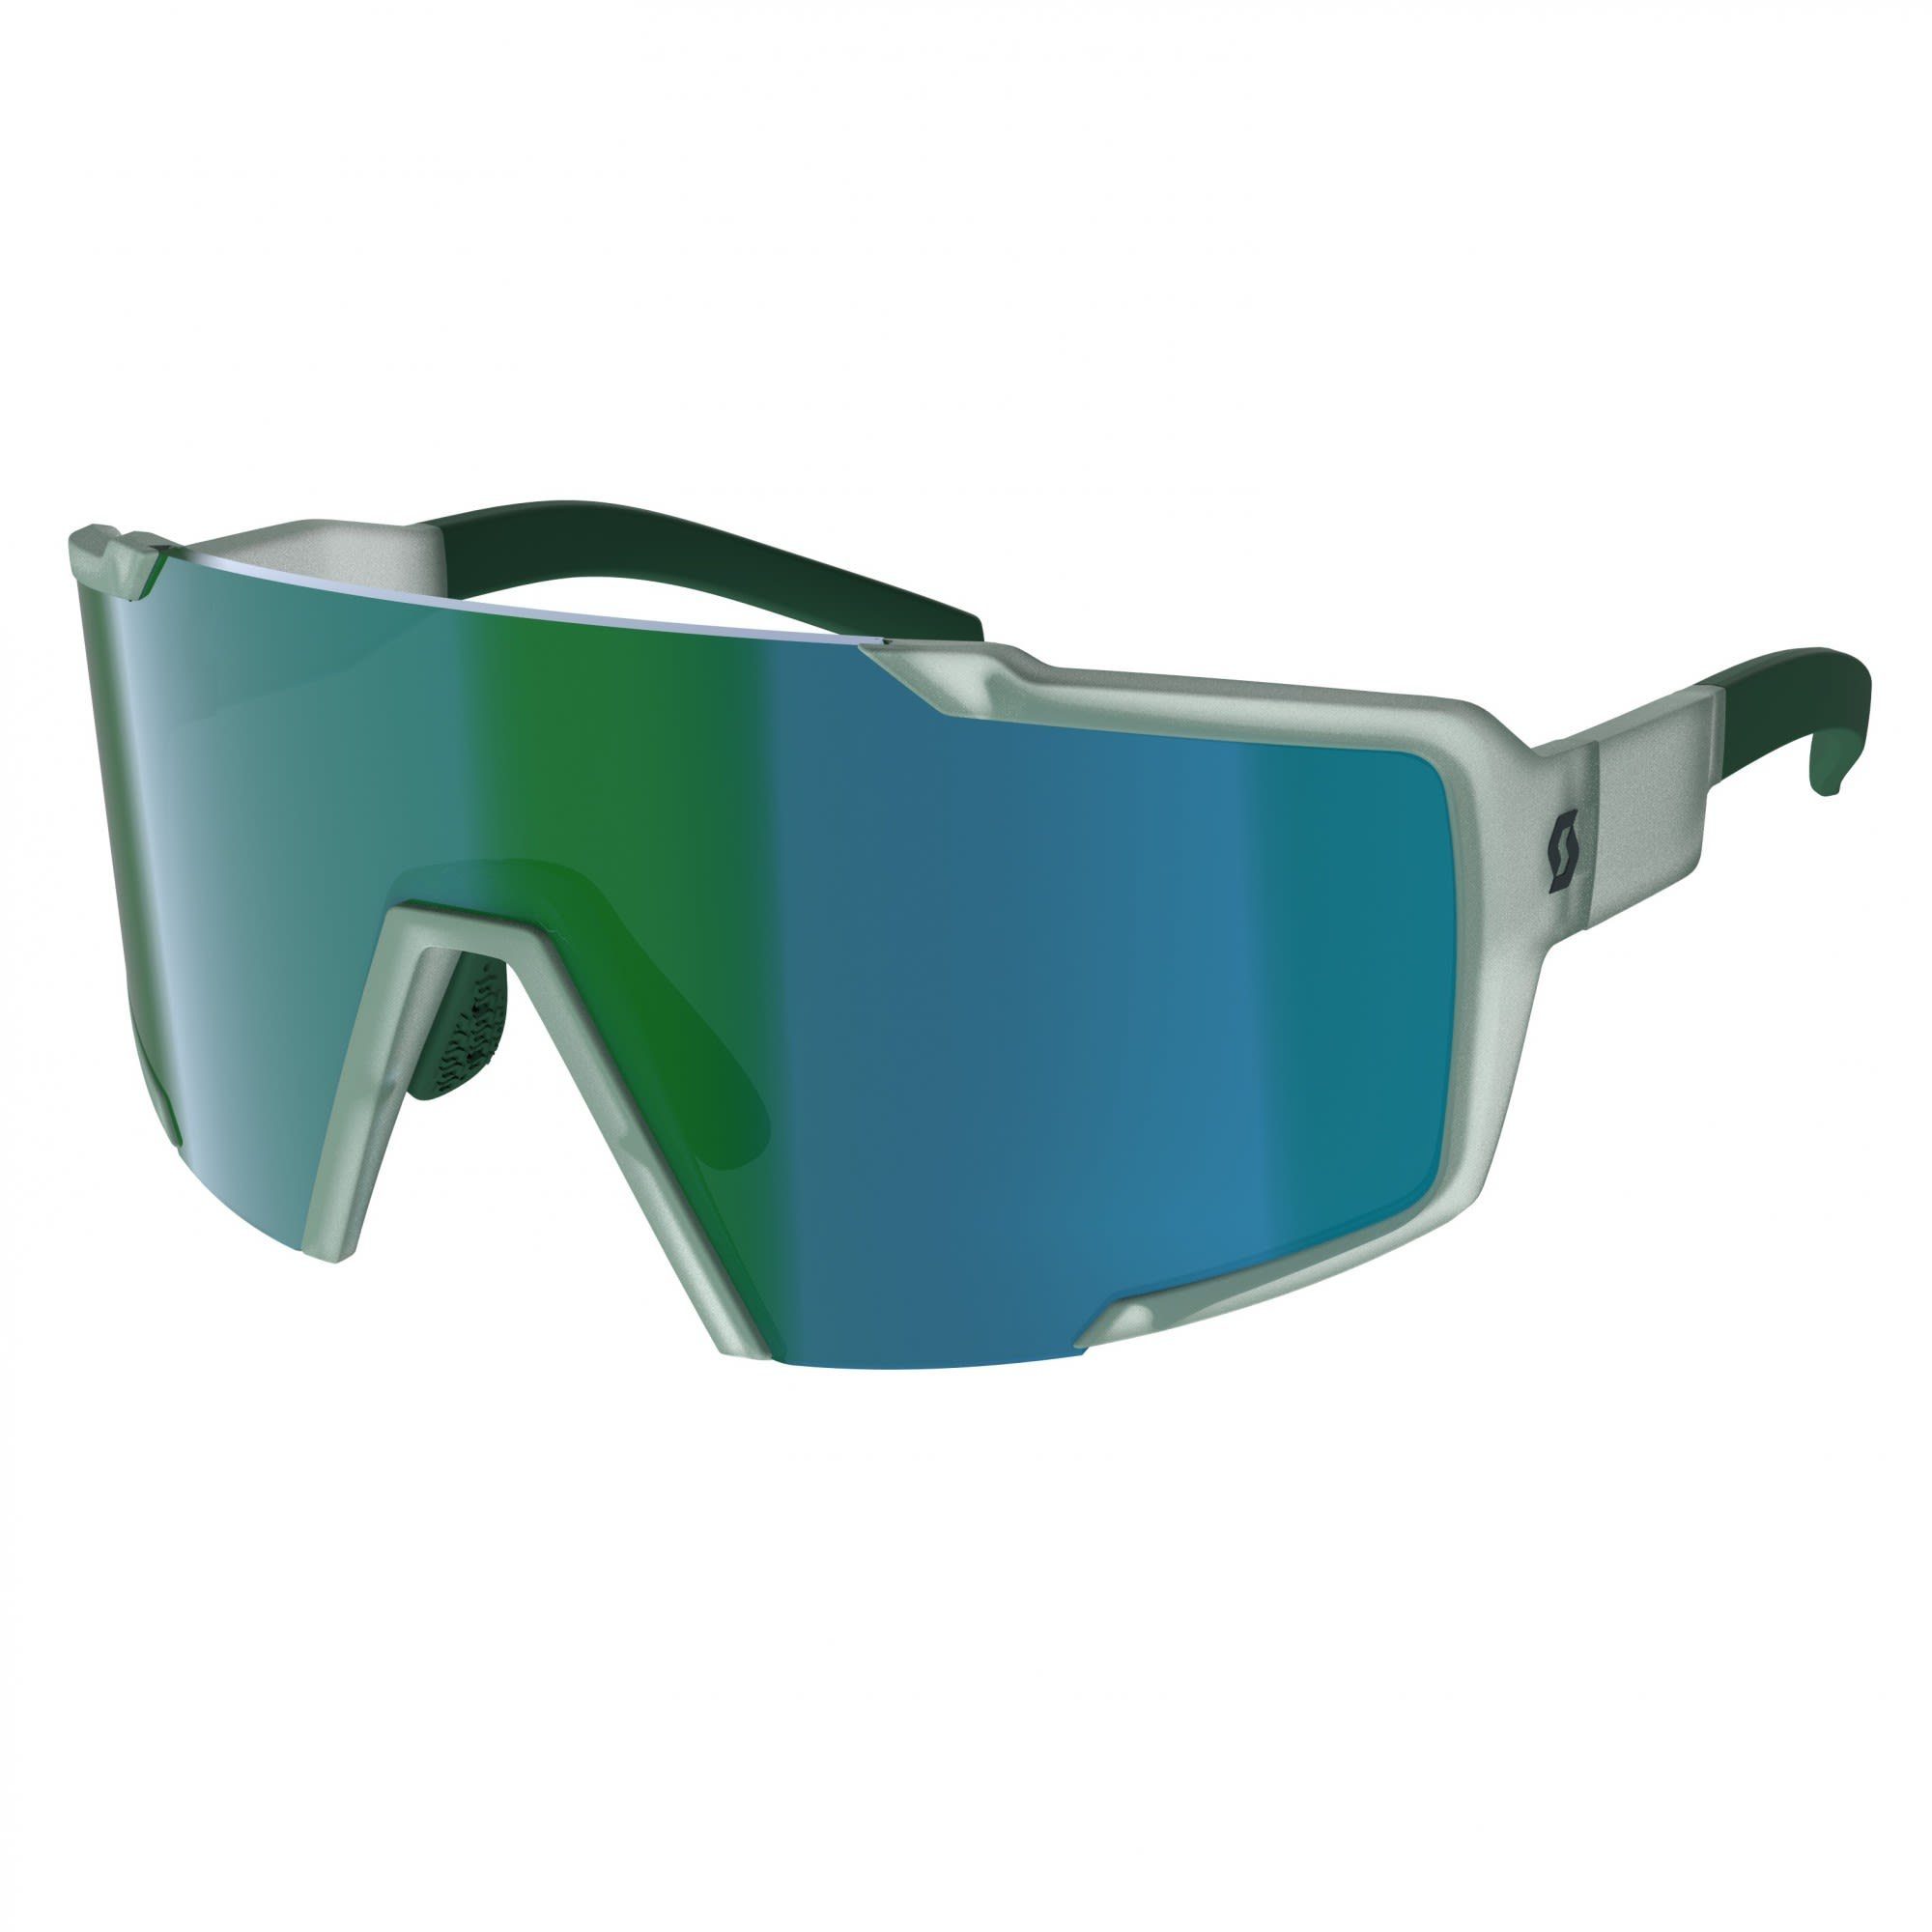 Scott Scott Green Accessoires Shield Fahrradbrille Mineral - Chrome Sunglasses Compact Blue